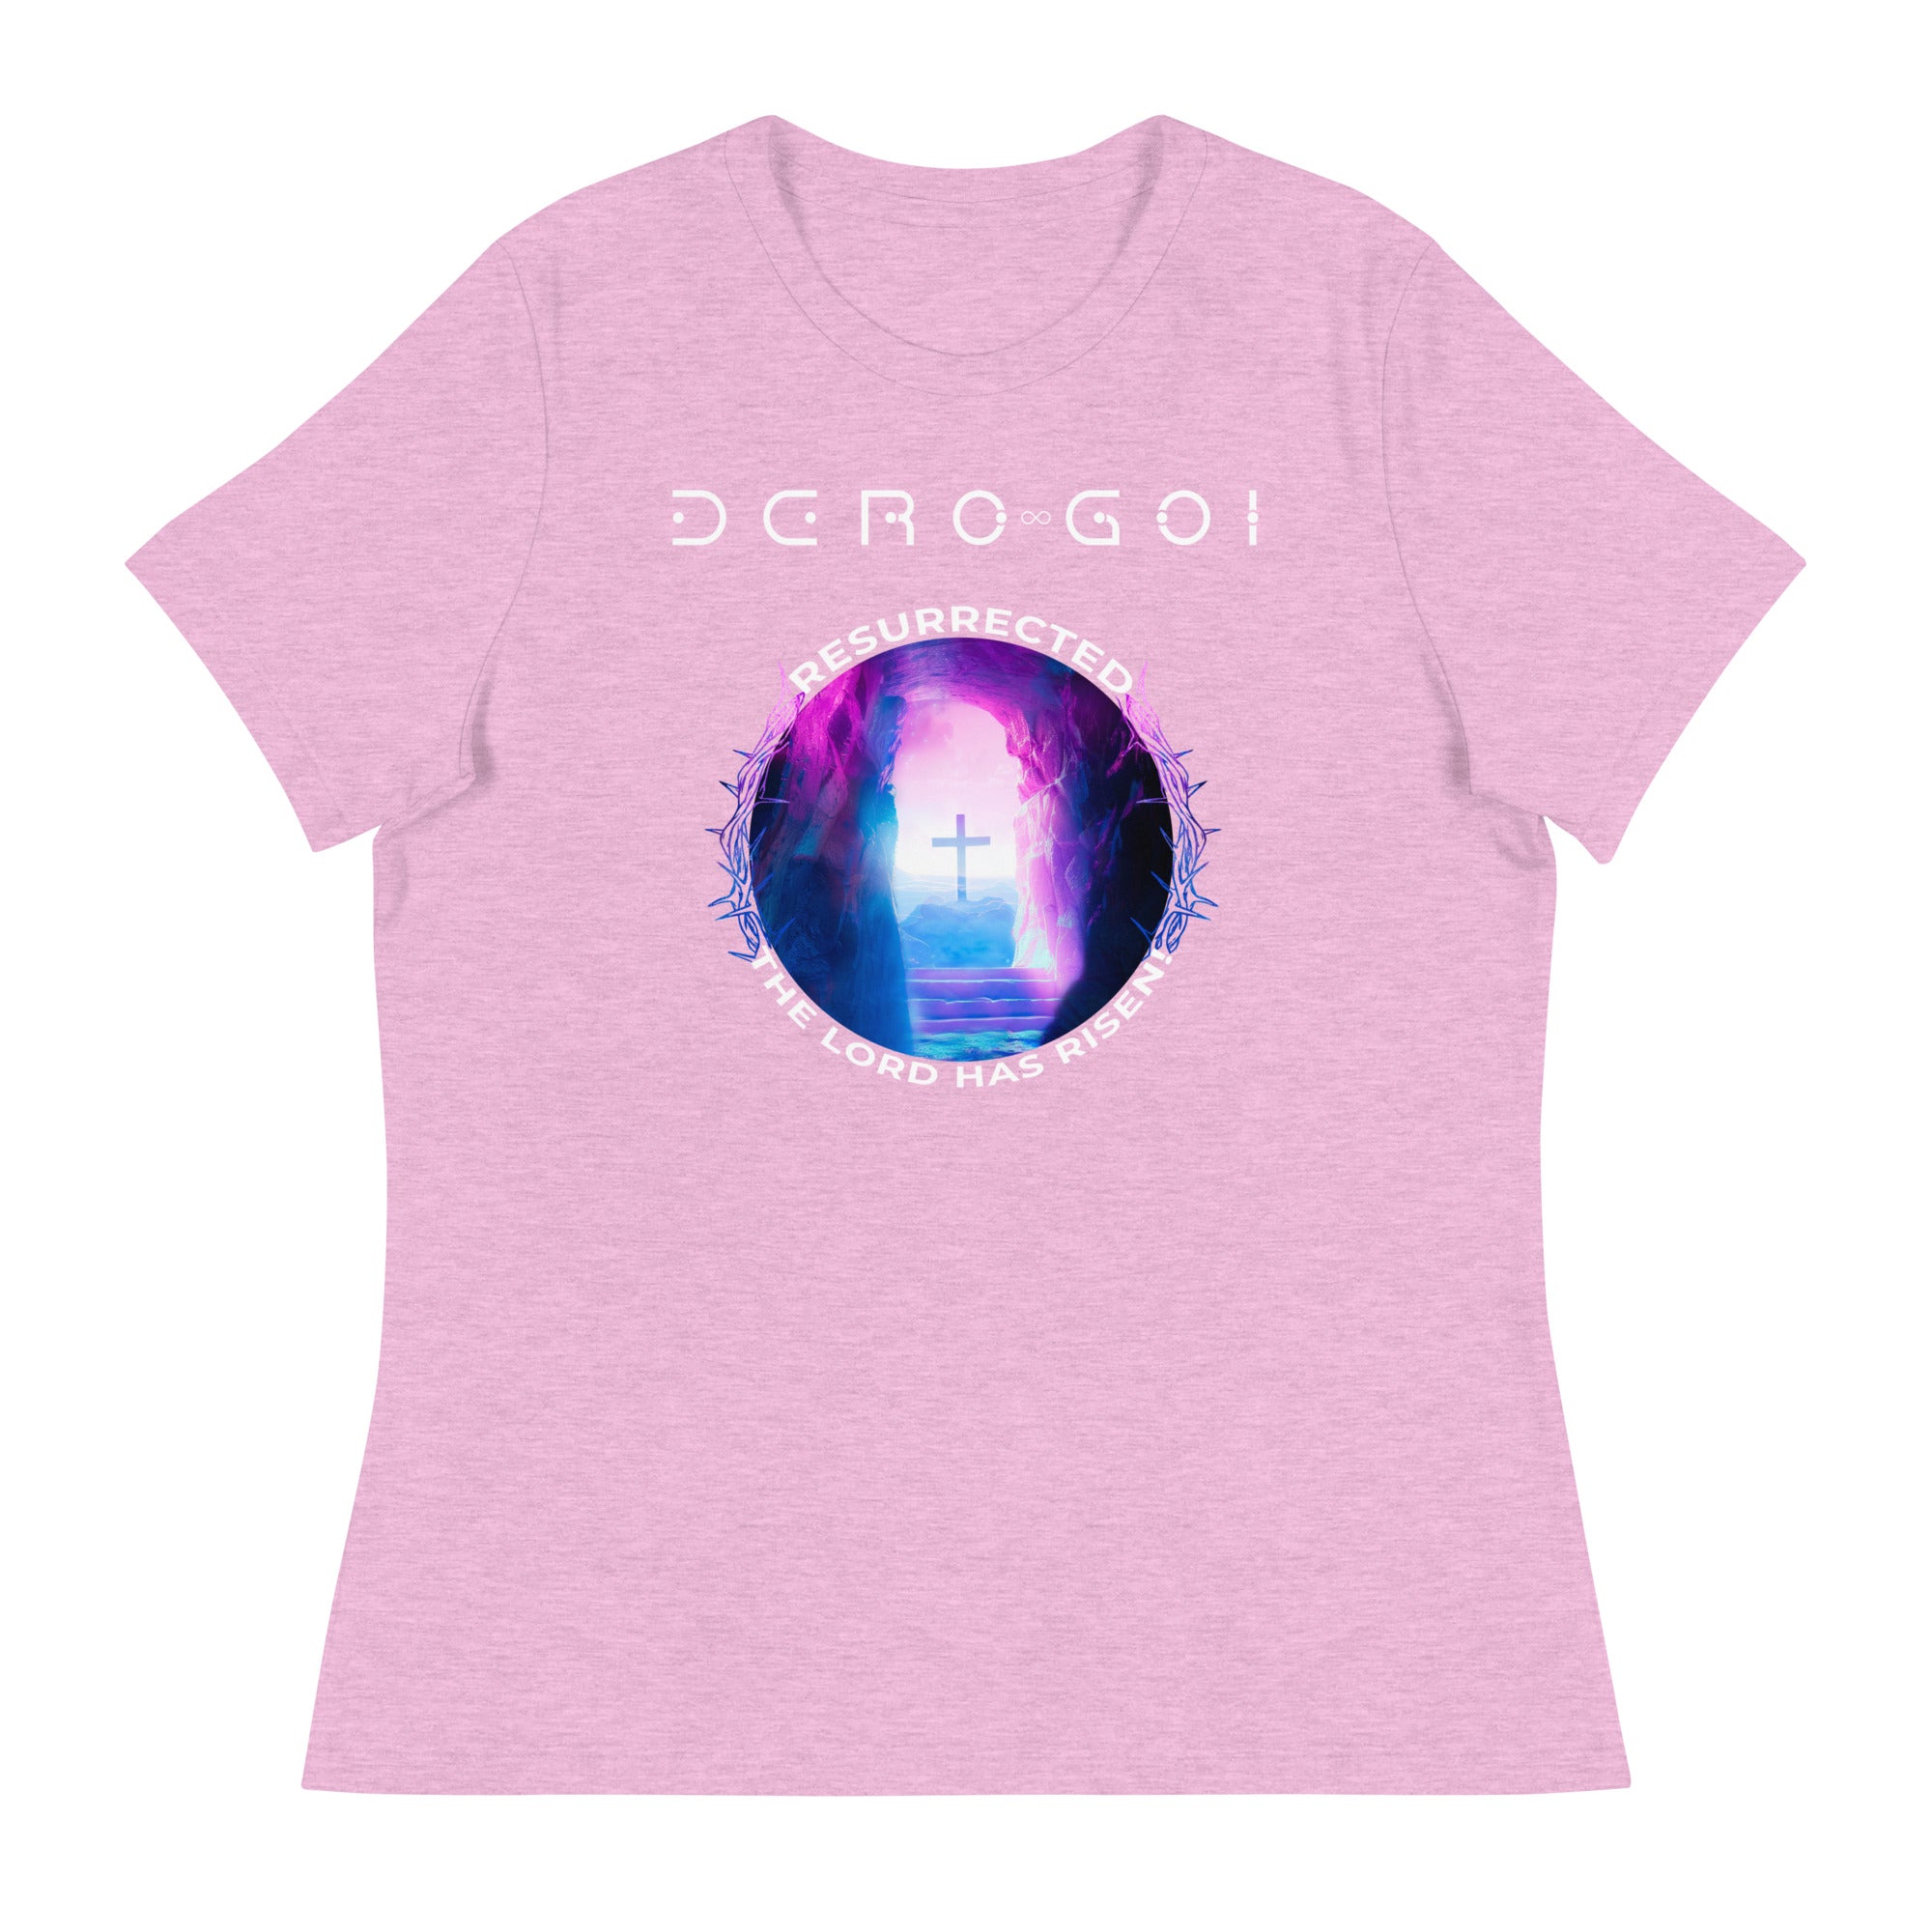 DERO GOI - Resurrected - Women's Relaxed T-Shirt